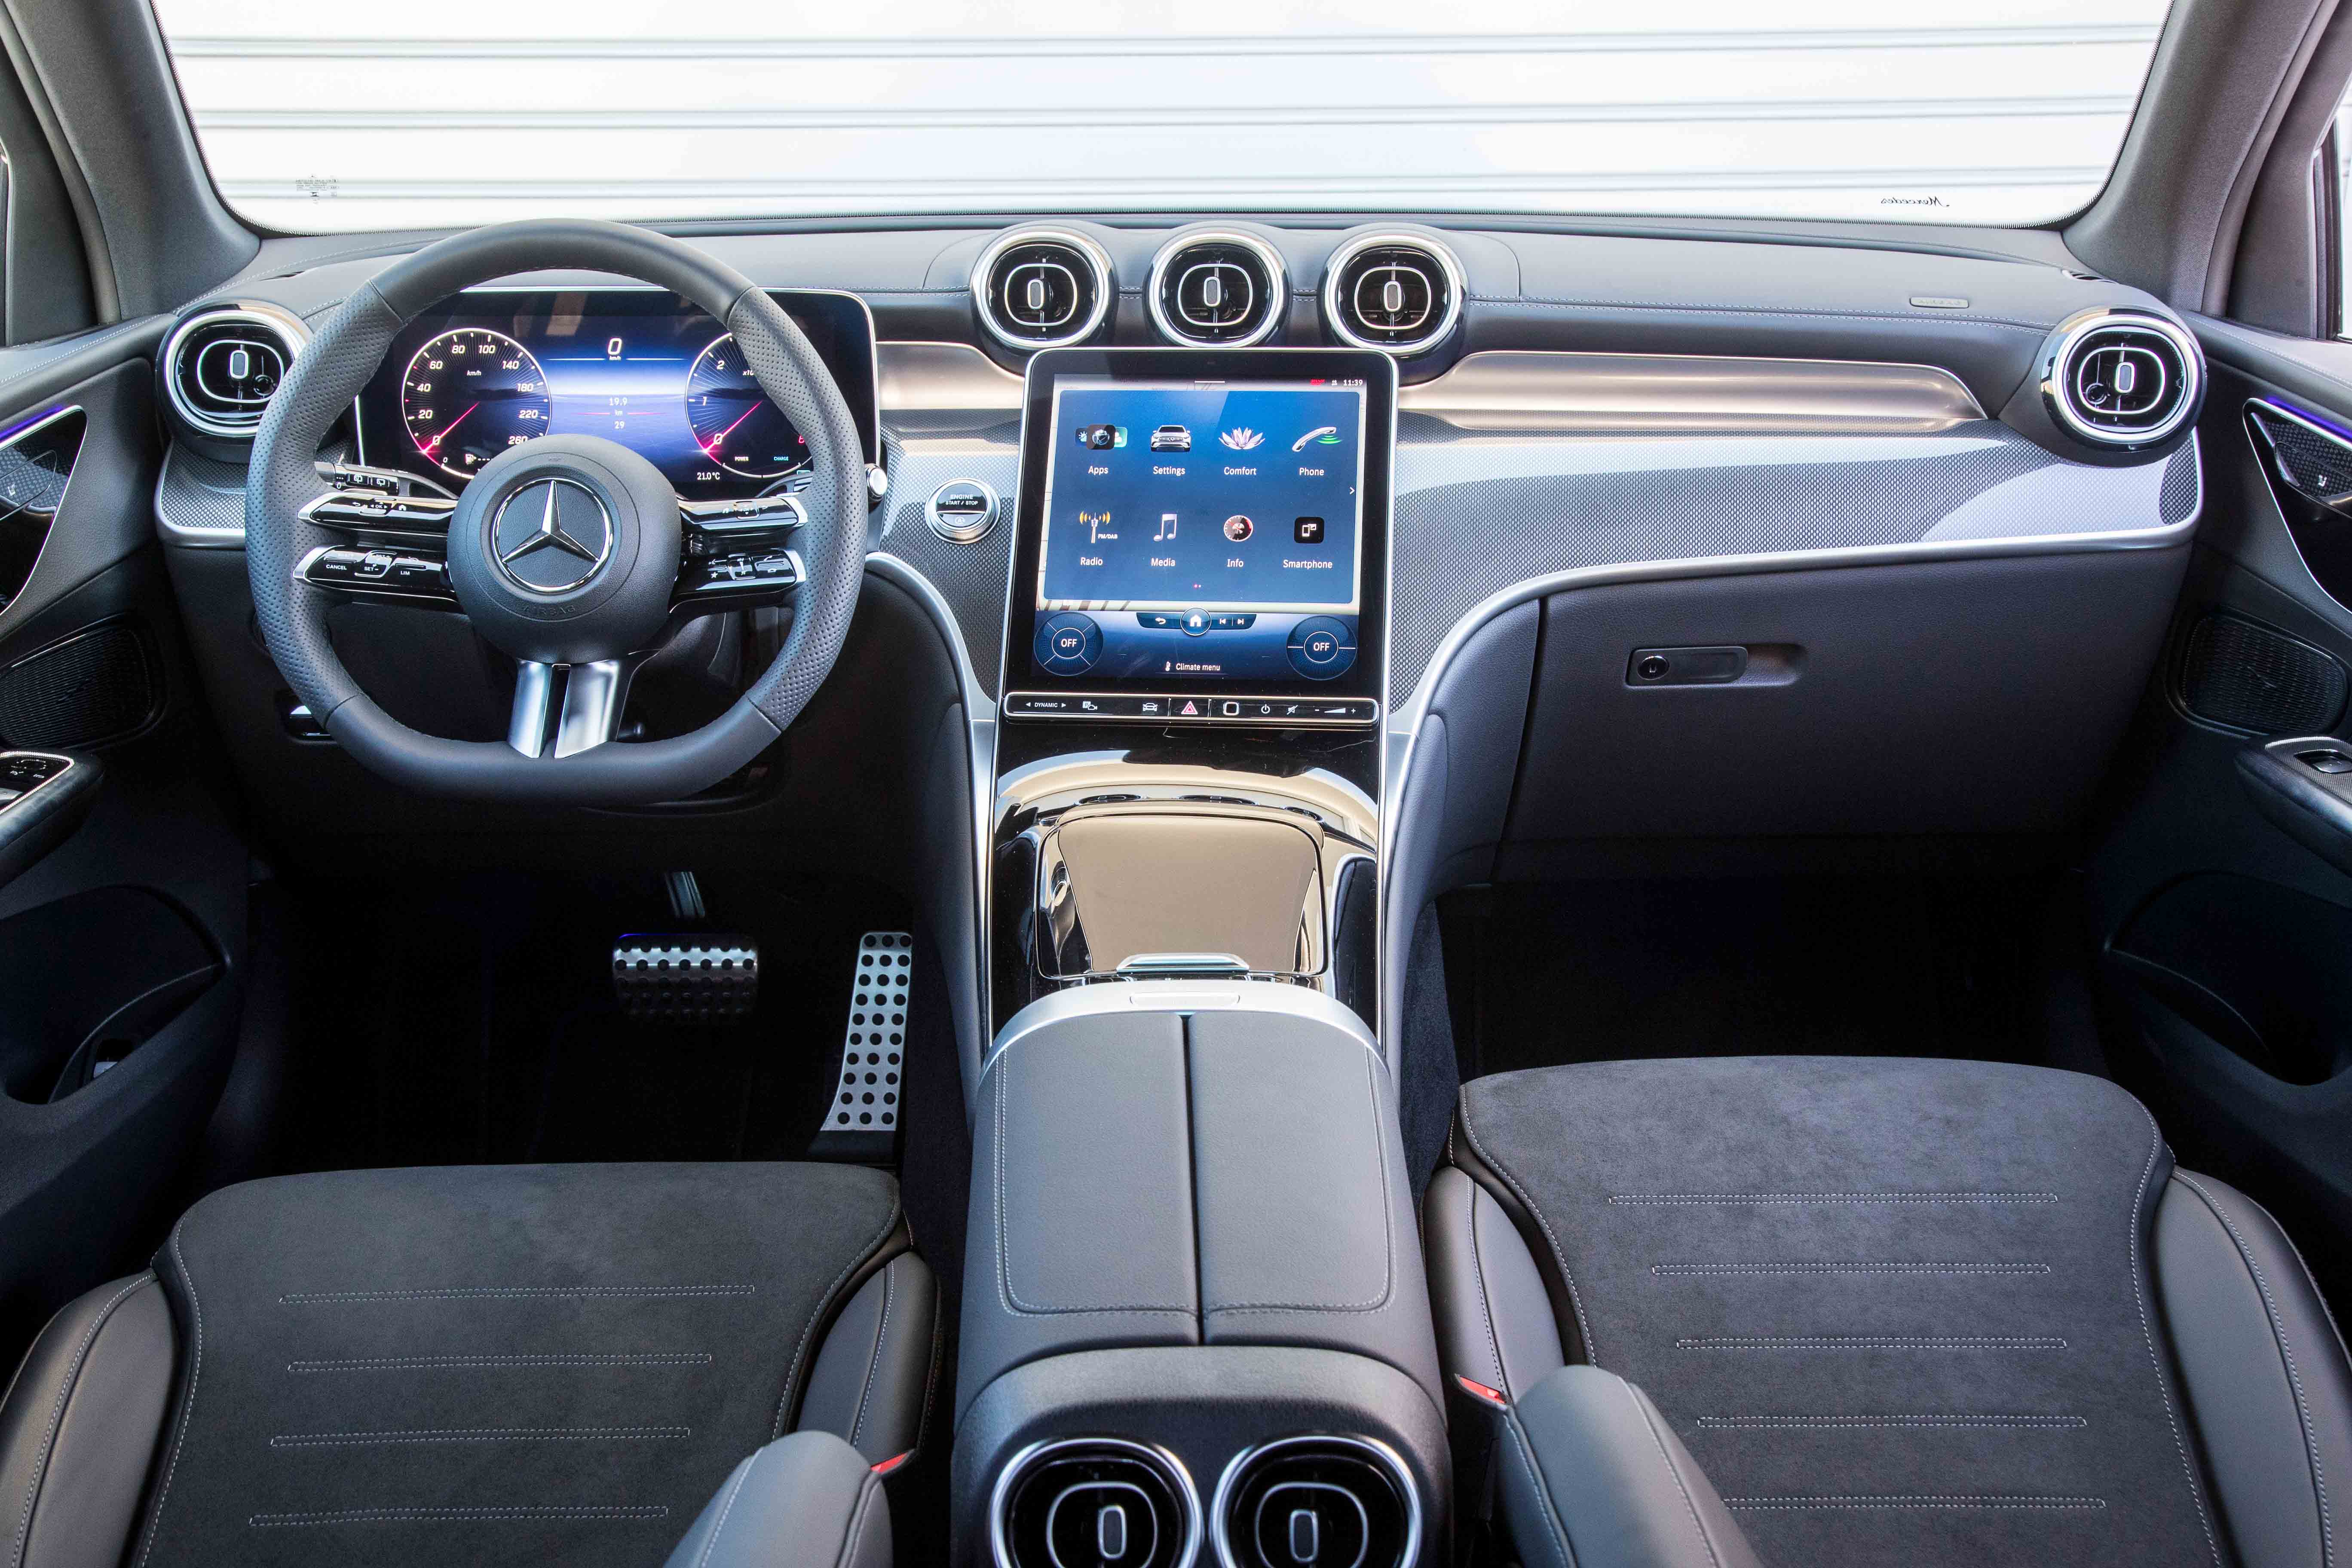 Test drive: Mercedes-Benz GLC 220d fl, Photo credit DRIVE Media Group/ Thanasis Koutsogiannis